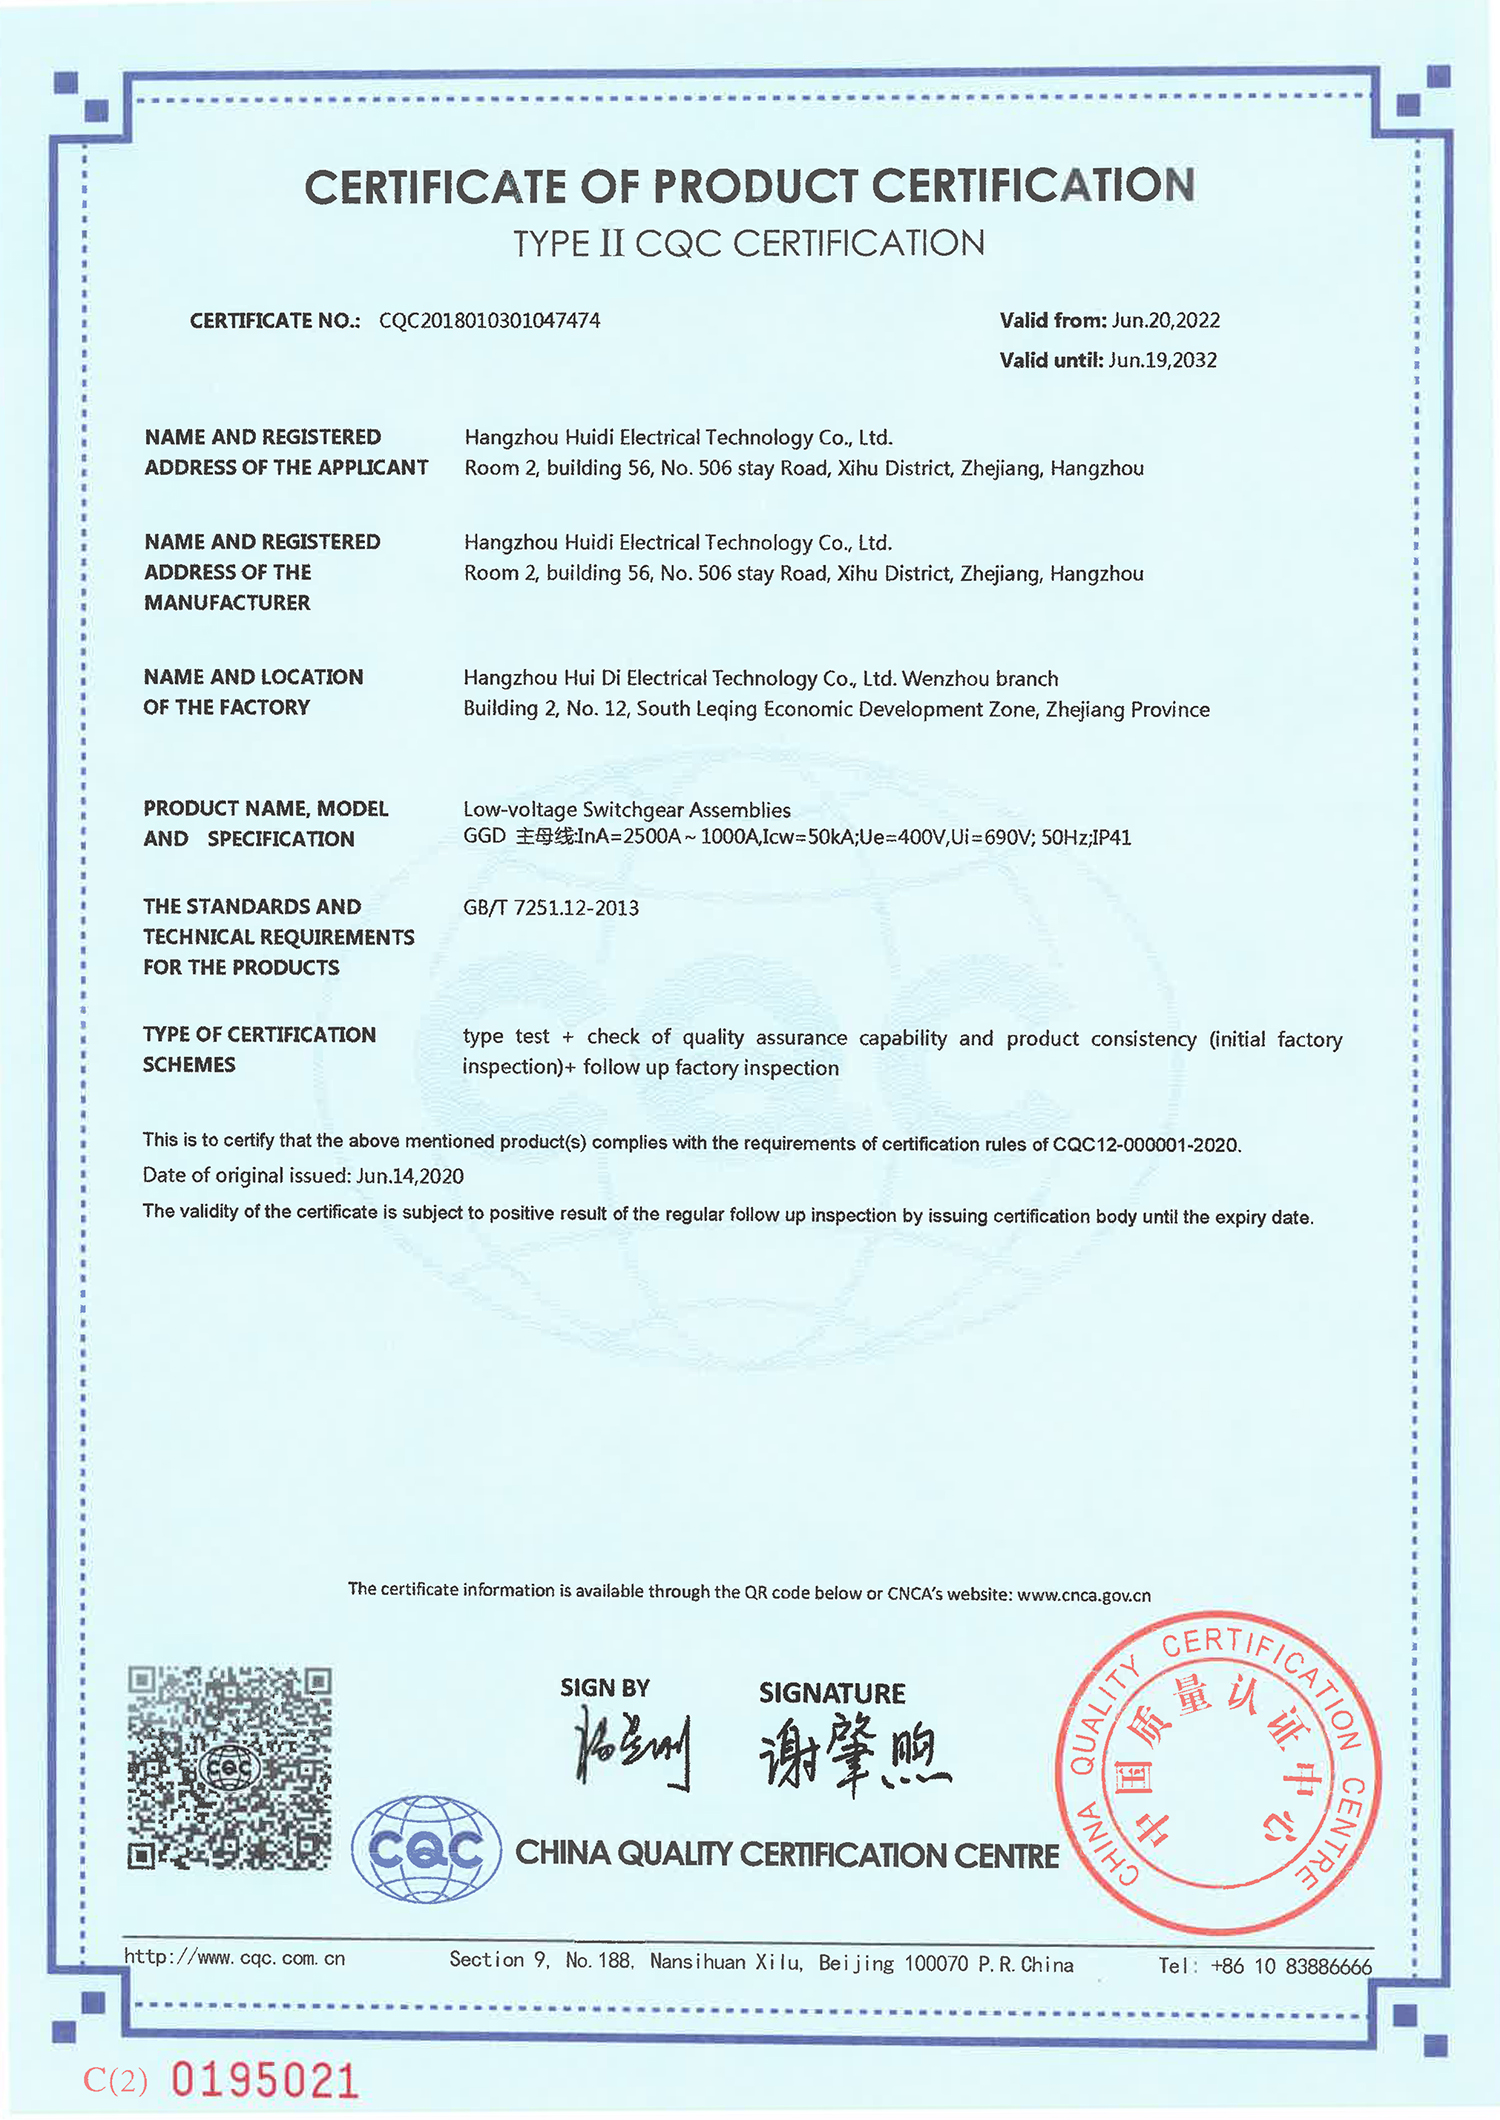 huud certificate 4